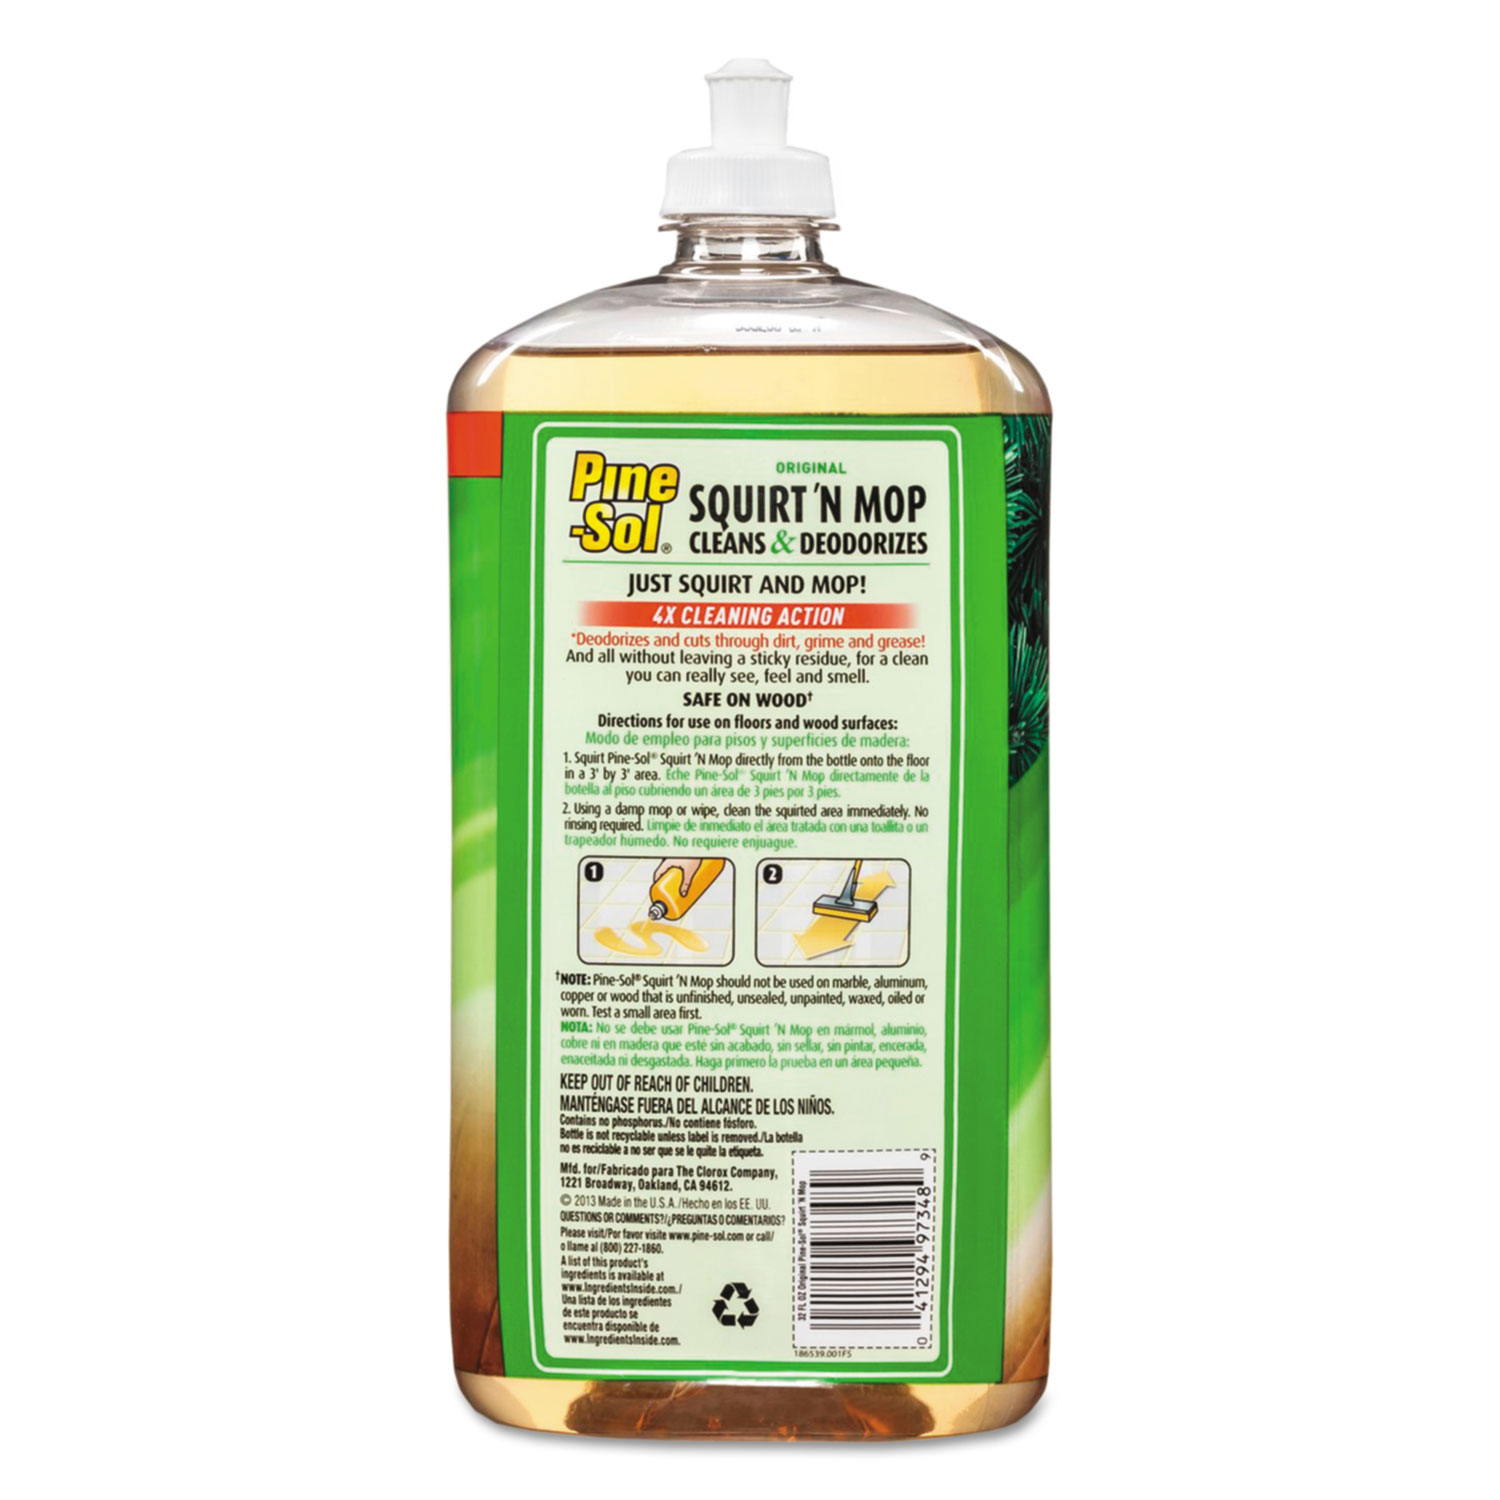 Squirt n Mop Multi-Surface Floor Cleaner, 32 oz Bottle, Original Scent, 6/CT